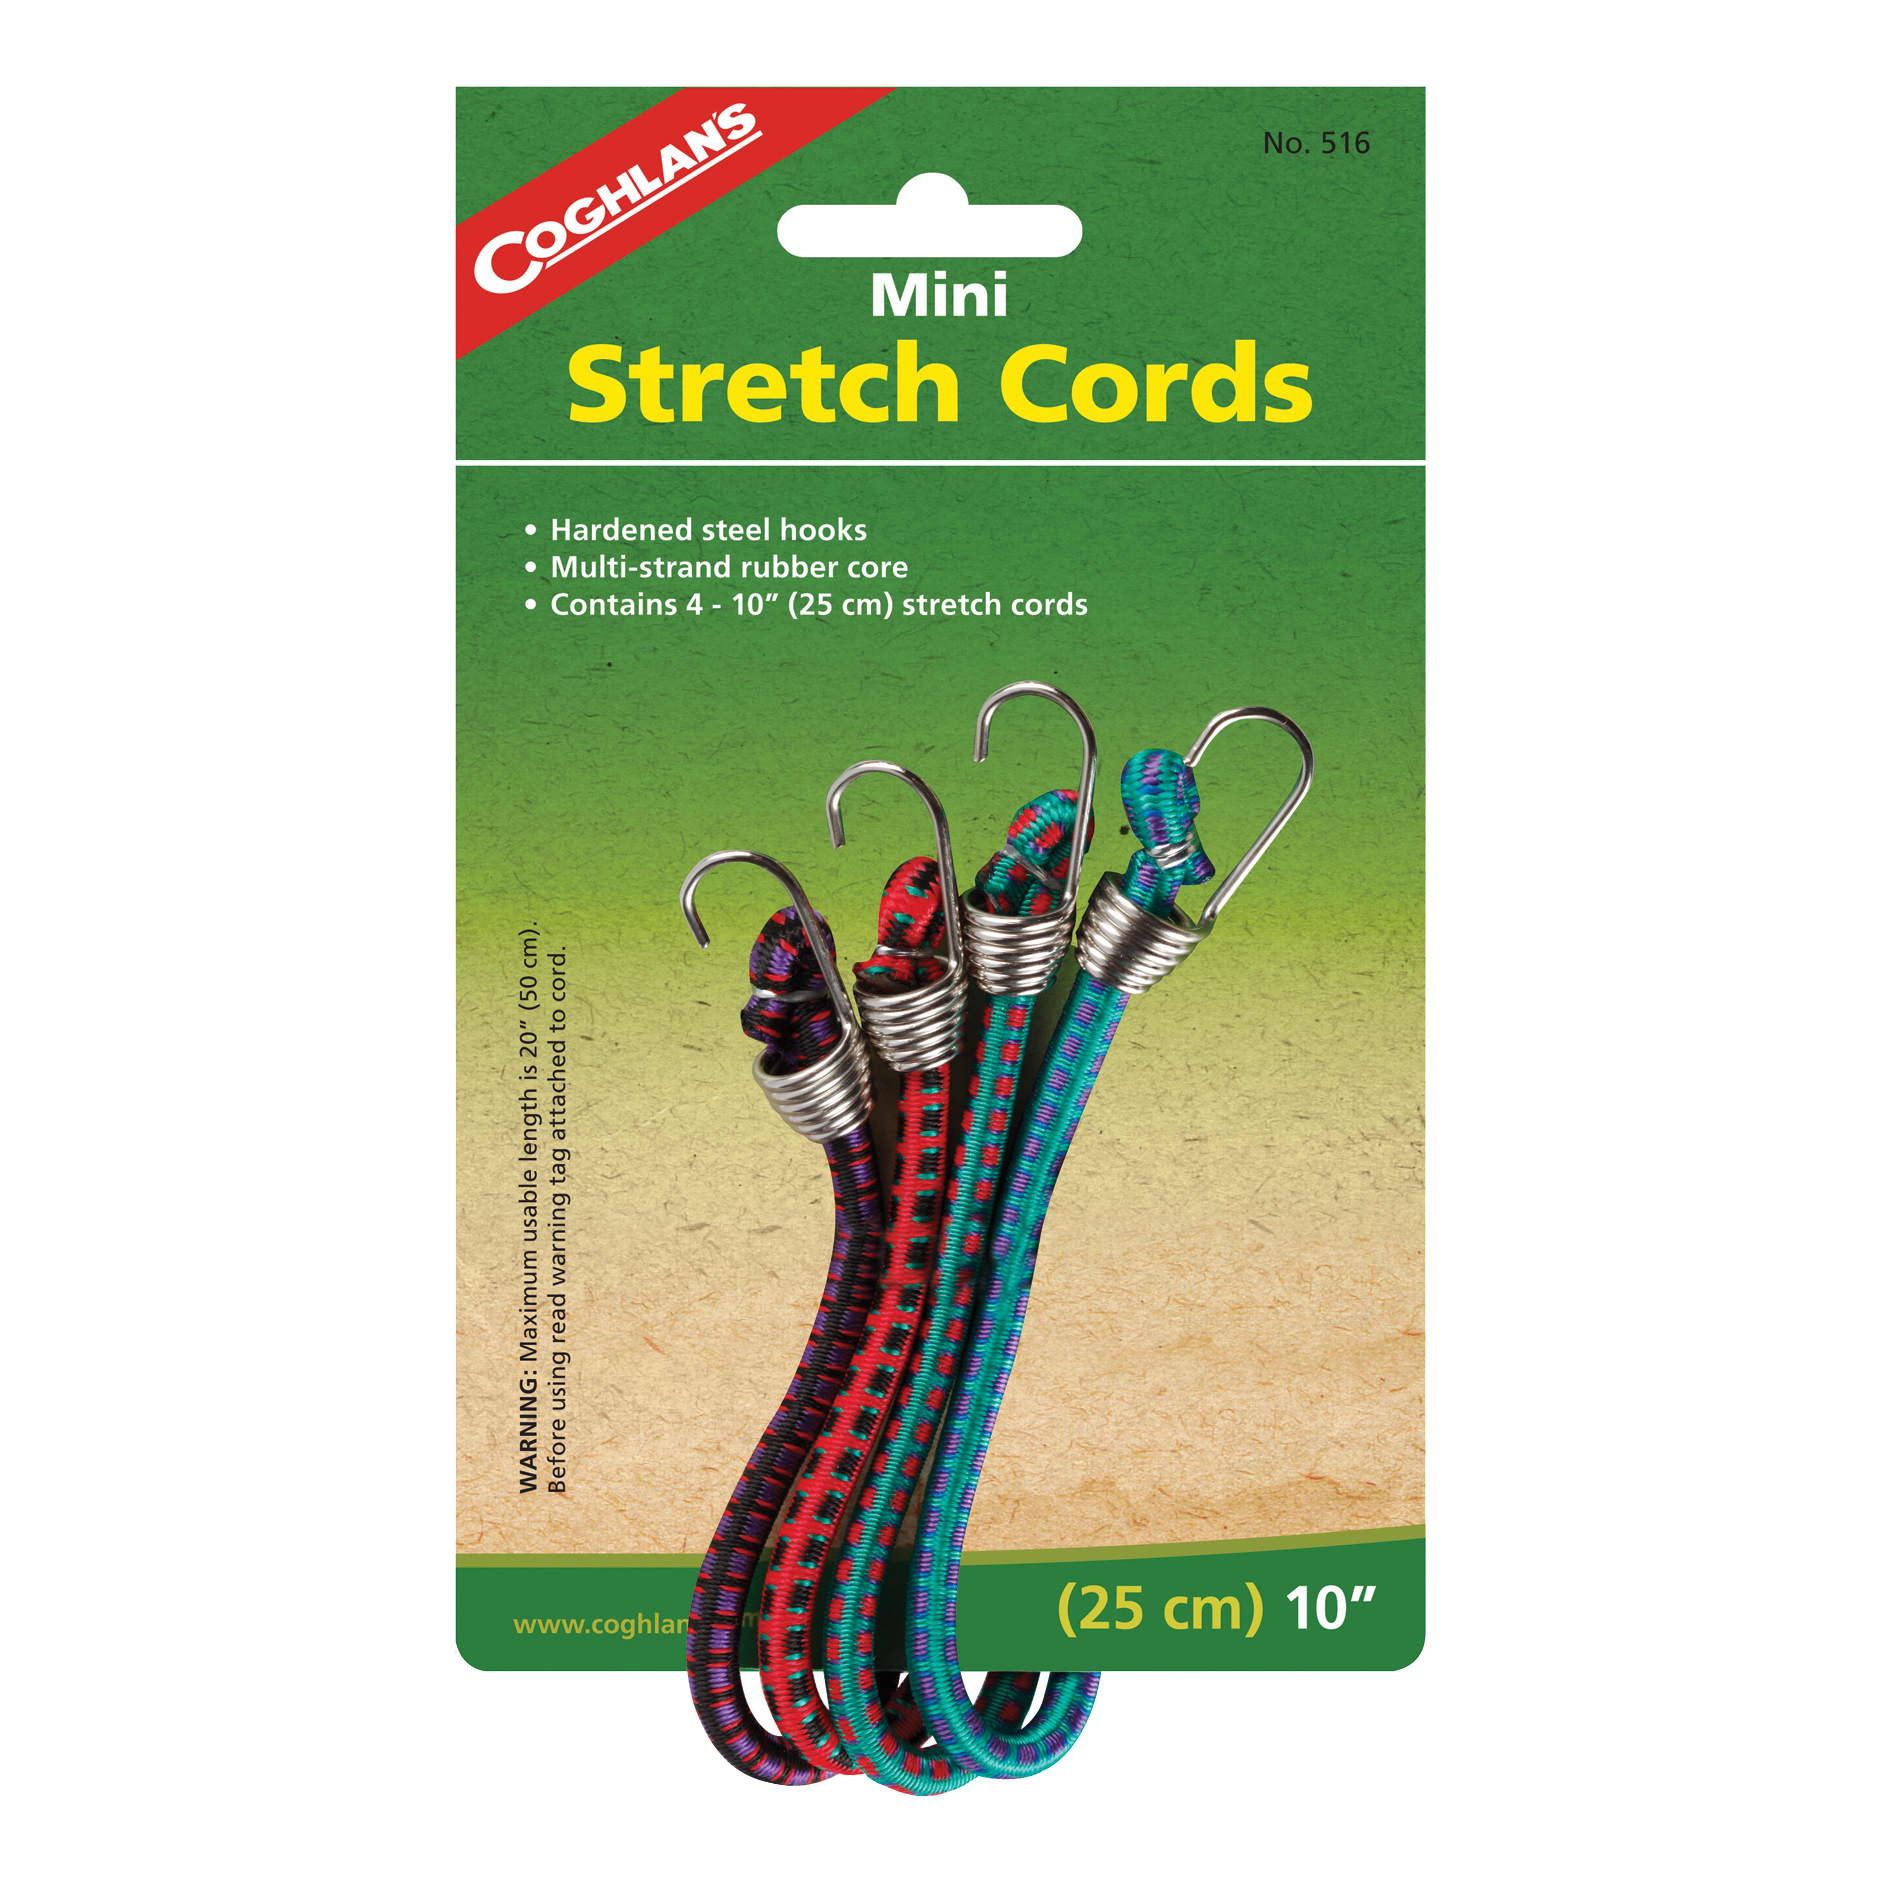 Coghlan's 10" Mini Stretch Cords